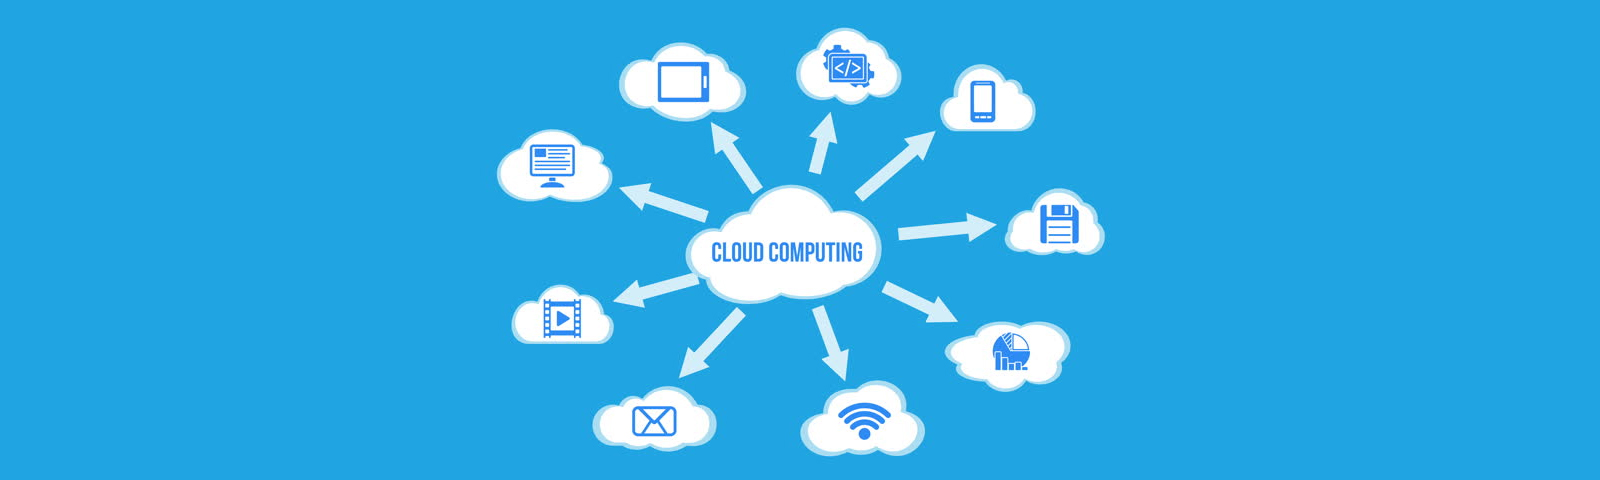 cloud computing brisbane 